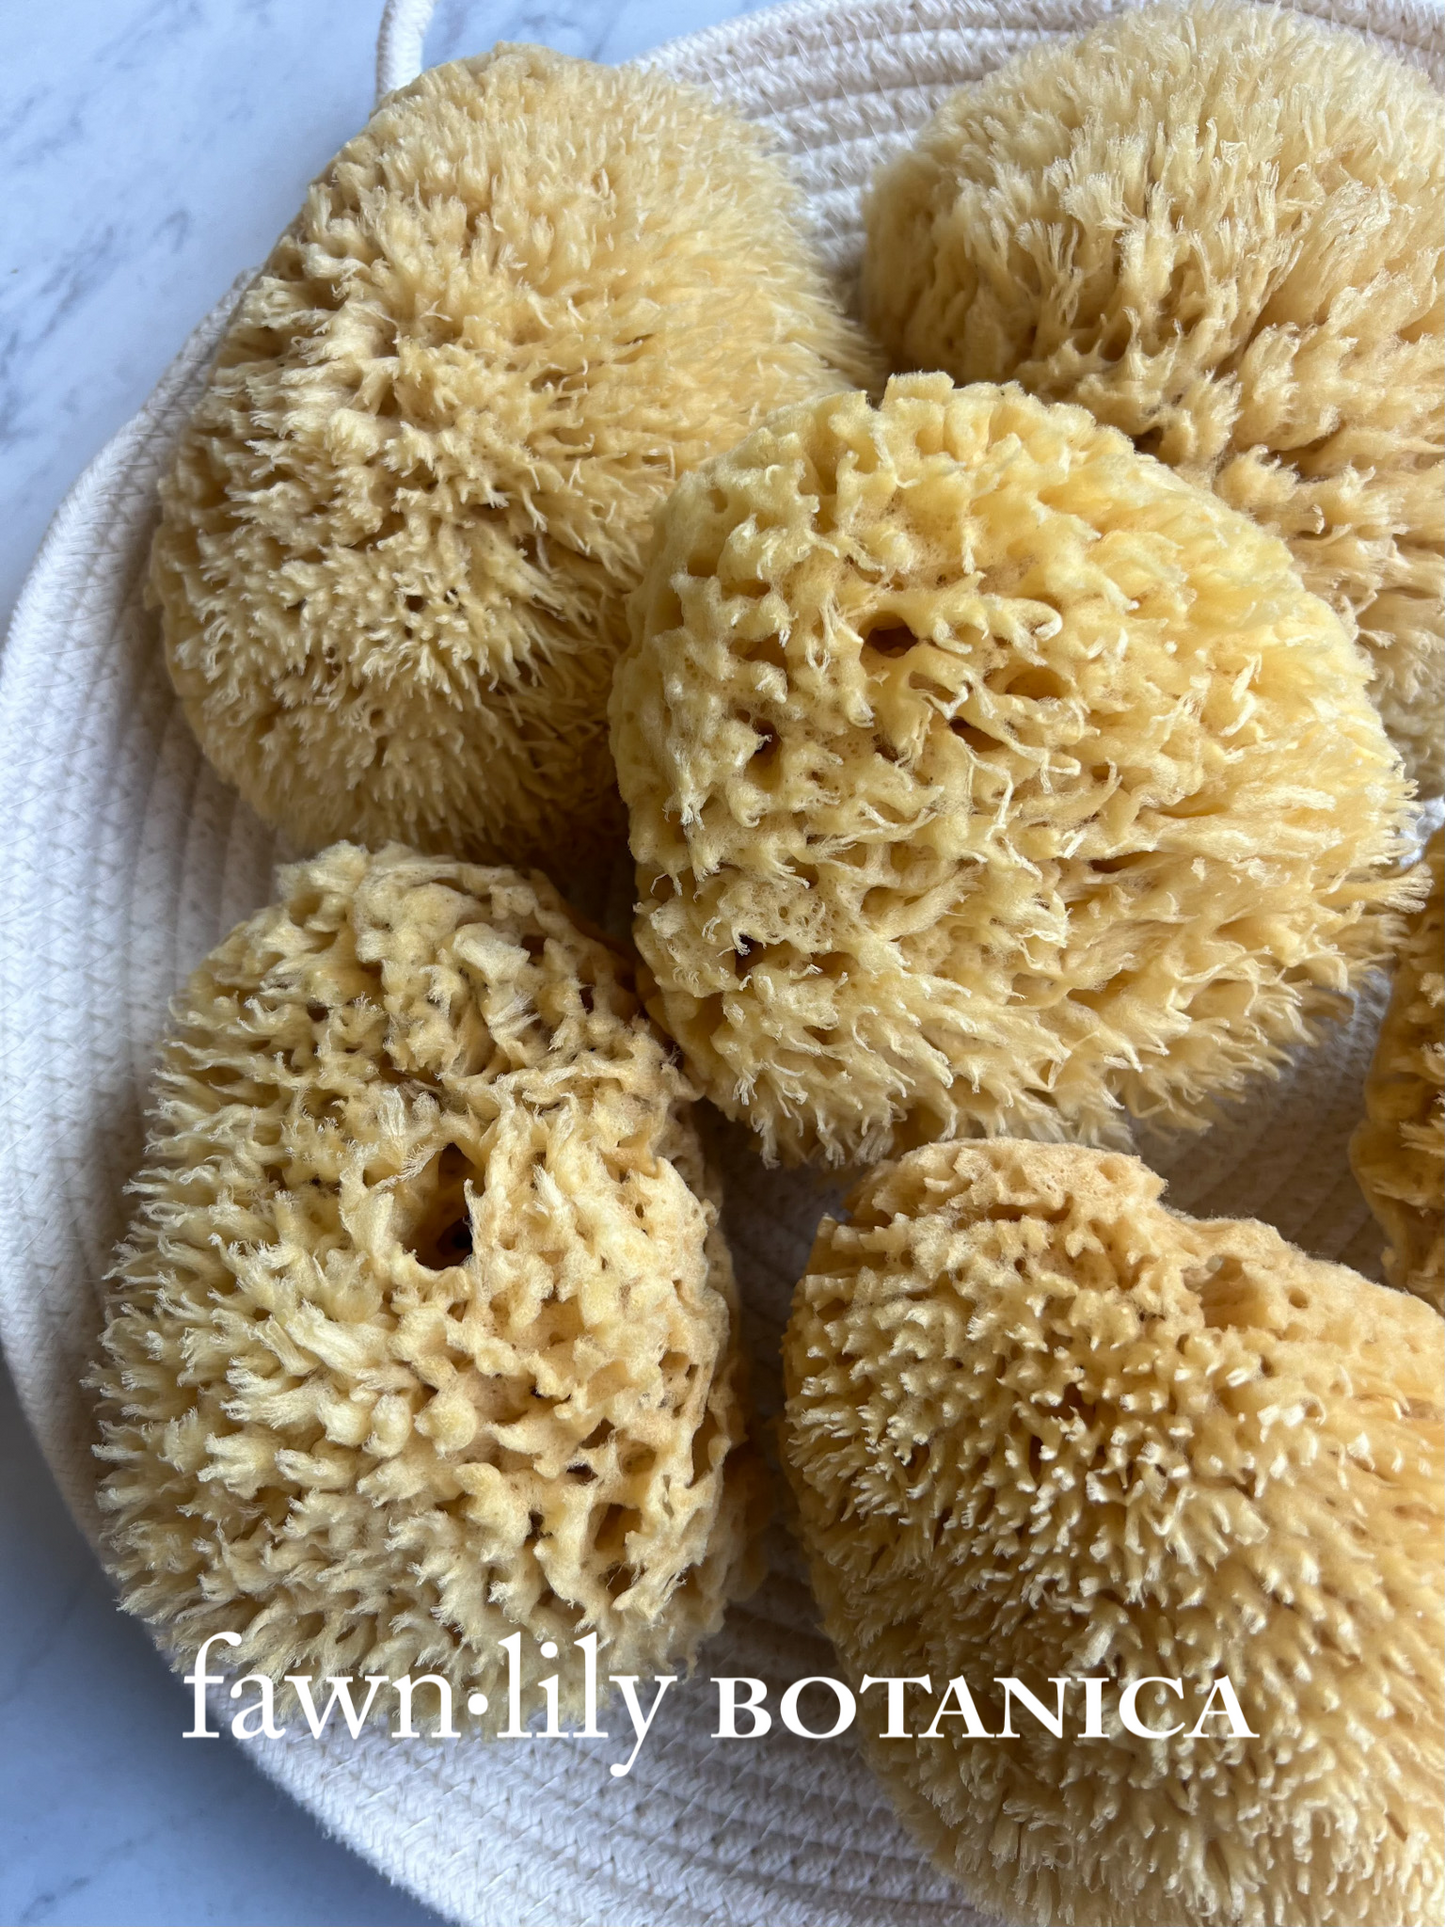 Fawn Lily Botanica | bathing wool bath sea sponges premium quality sustainable ecofriendly